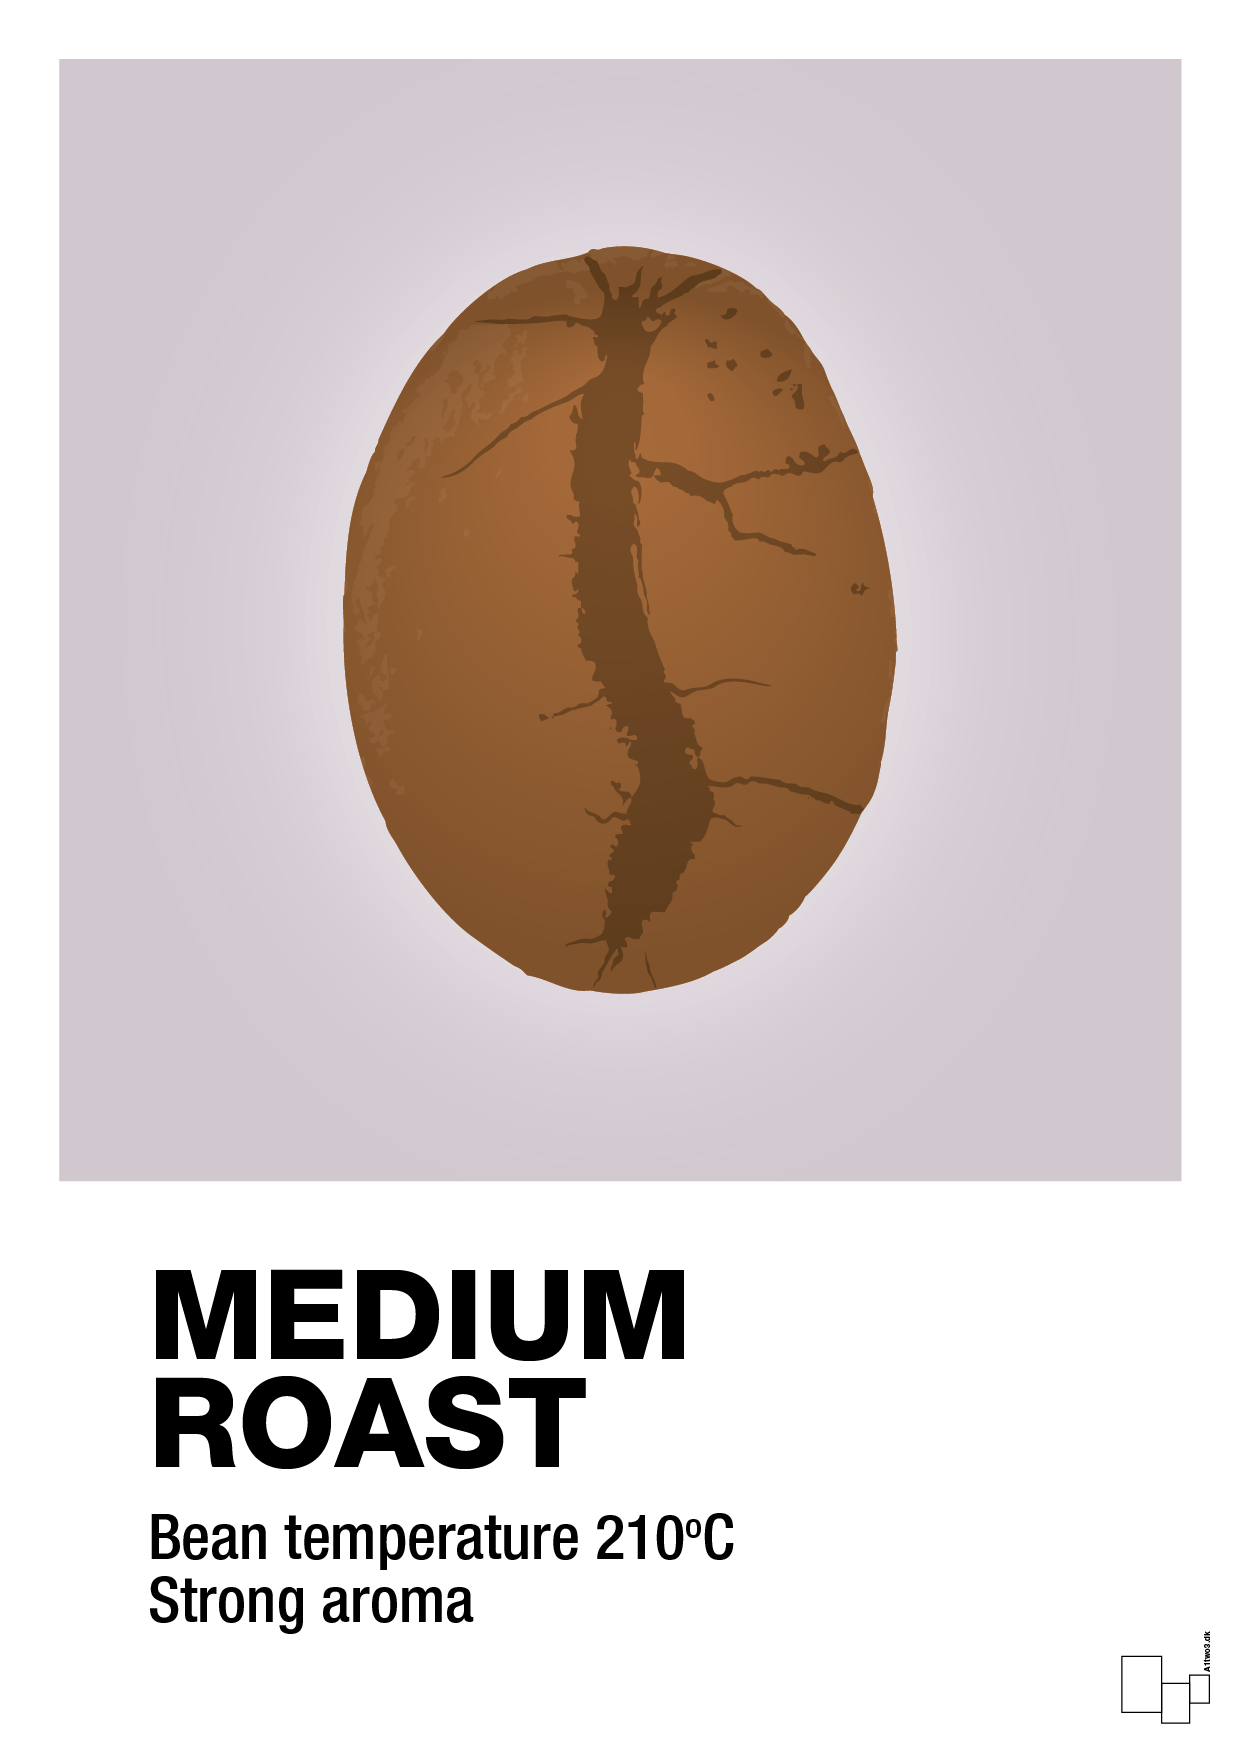 medium roast - Plakat med Mad & Drikke i Dusty Lilac